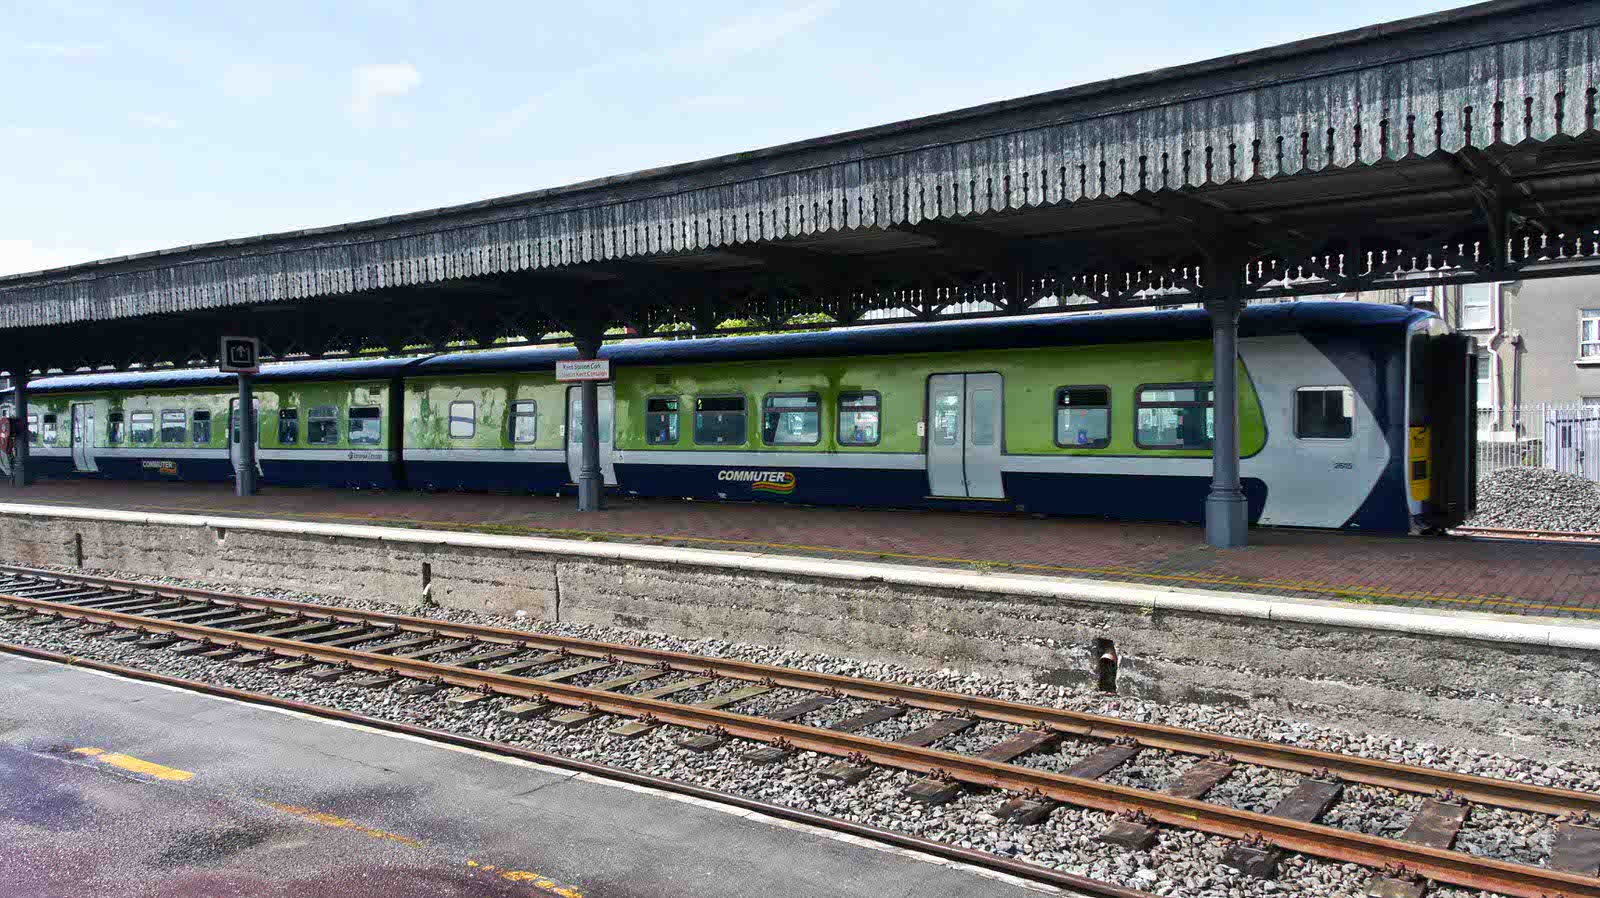  TRAIN STATION 